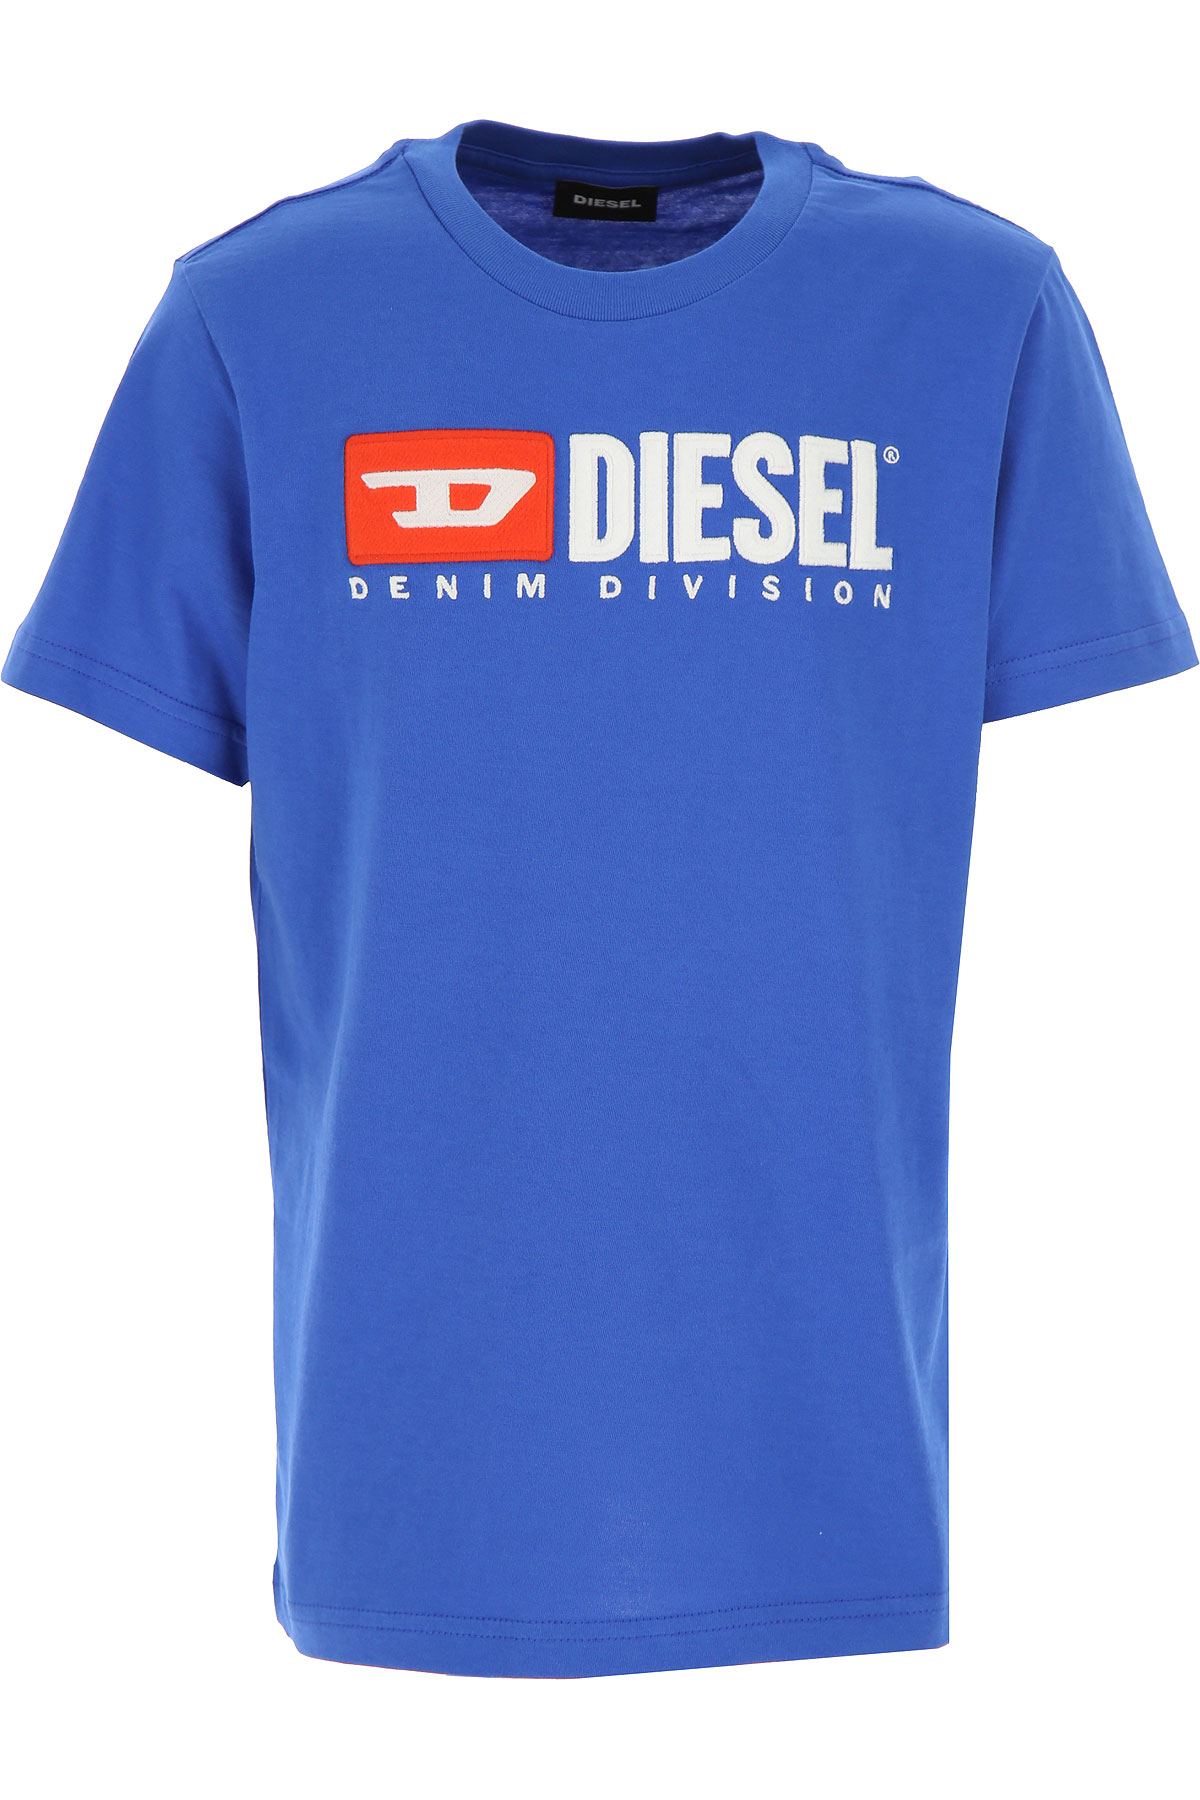 Diesel Kinder T-Shirt für Jungen Günstig im Sale, Hellblau, Baumwolle, 2017, 10Y 12Y 14Y 16Y 4Y 6Y 8Y